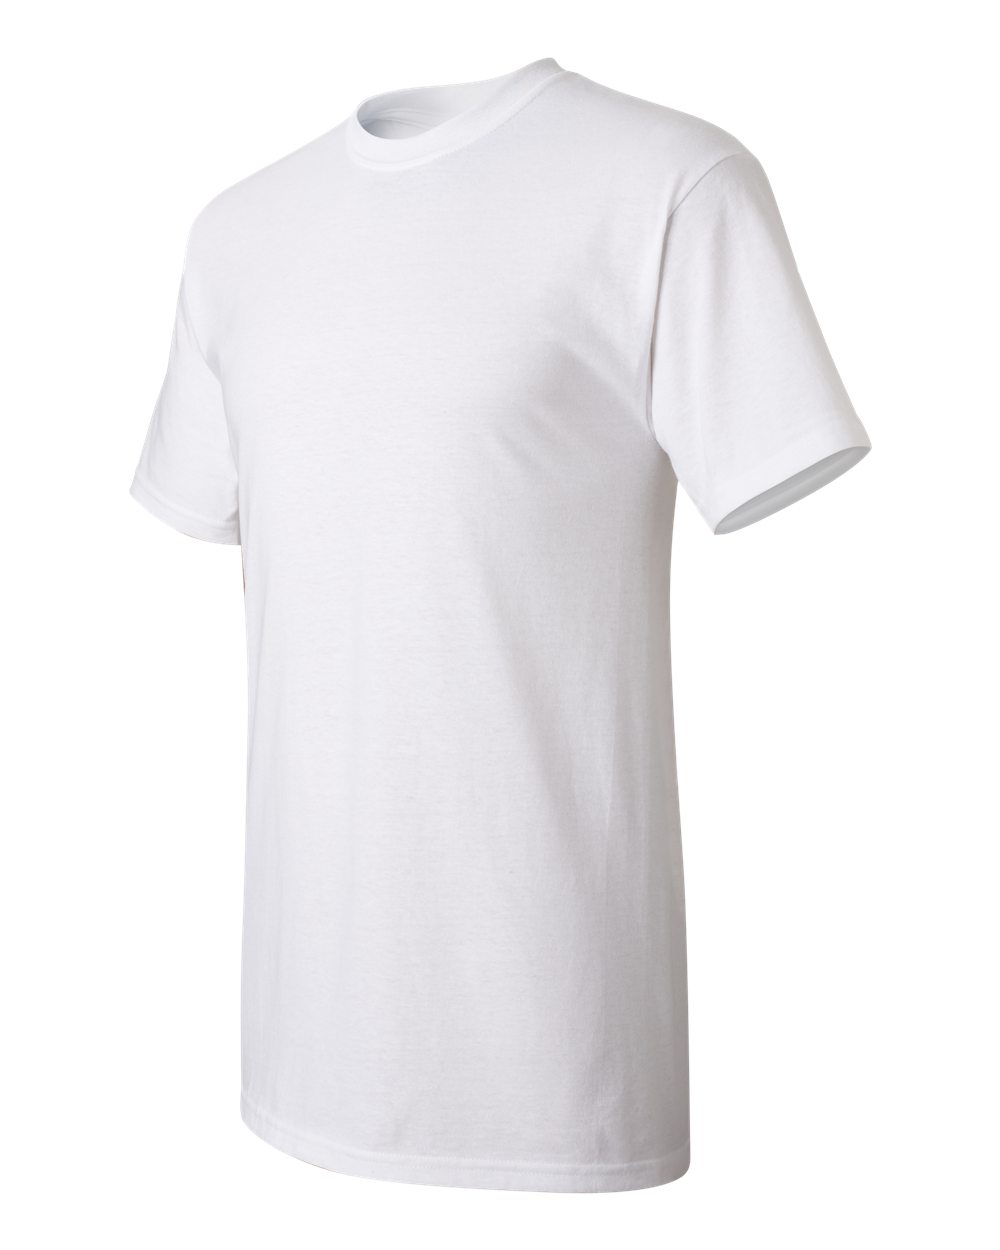 blank white t shirts